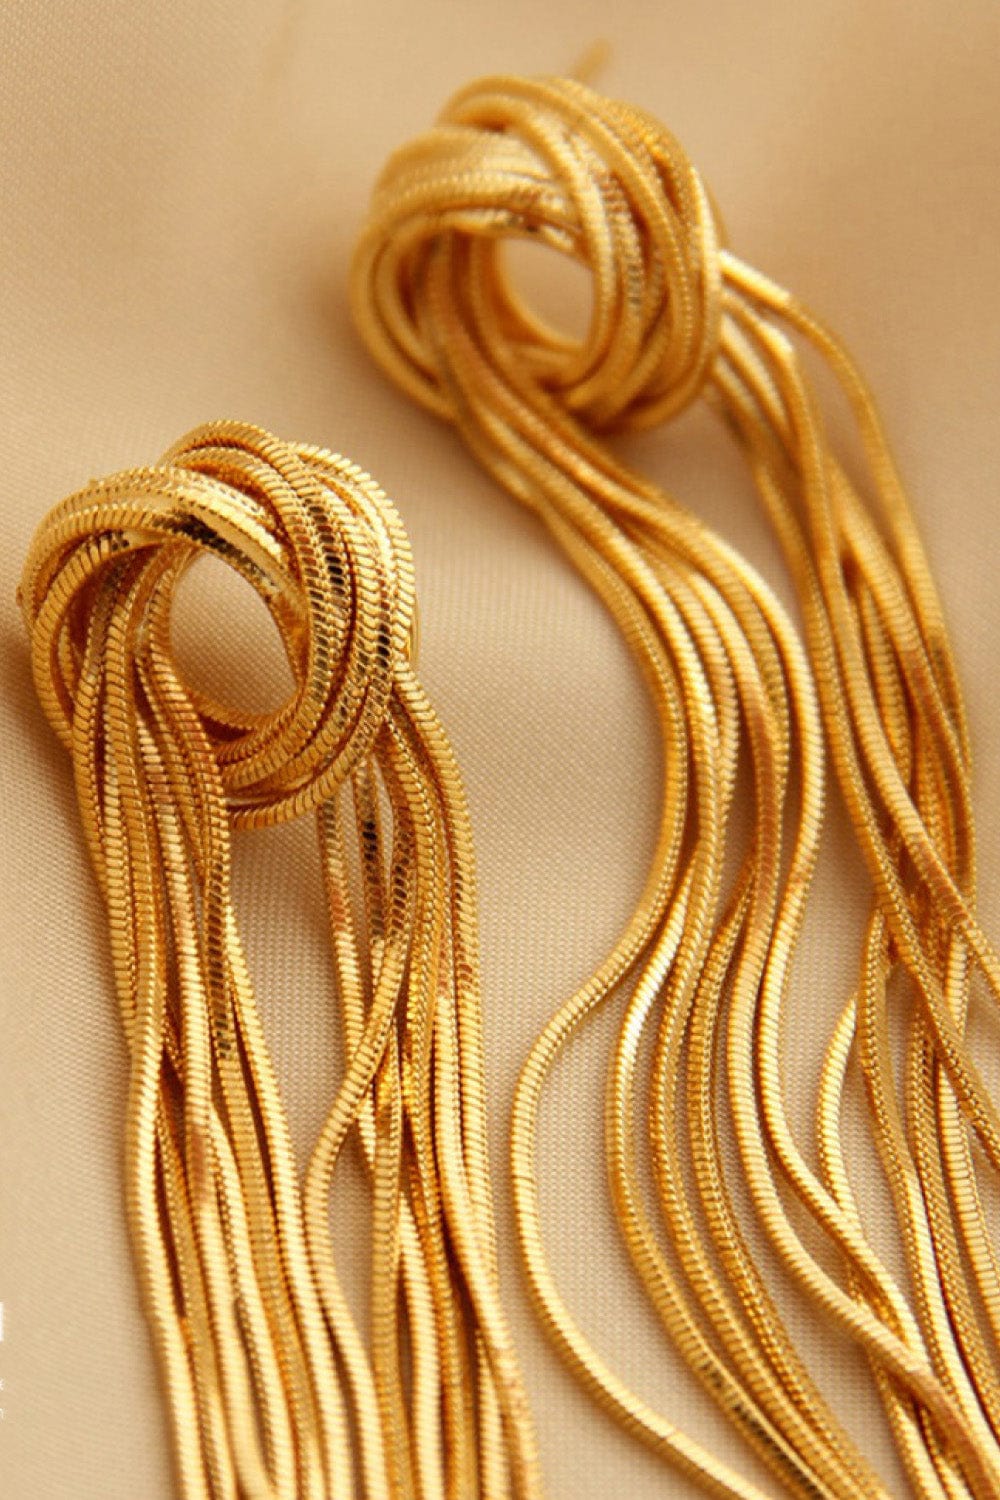 18K Gold Plated Fringe Earrings - Body By J'ne